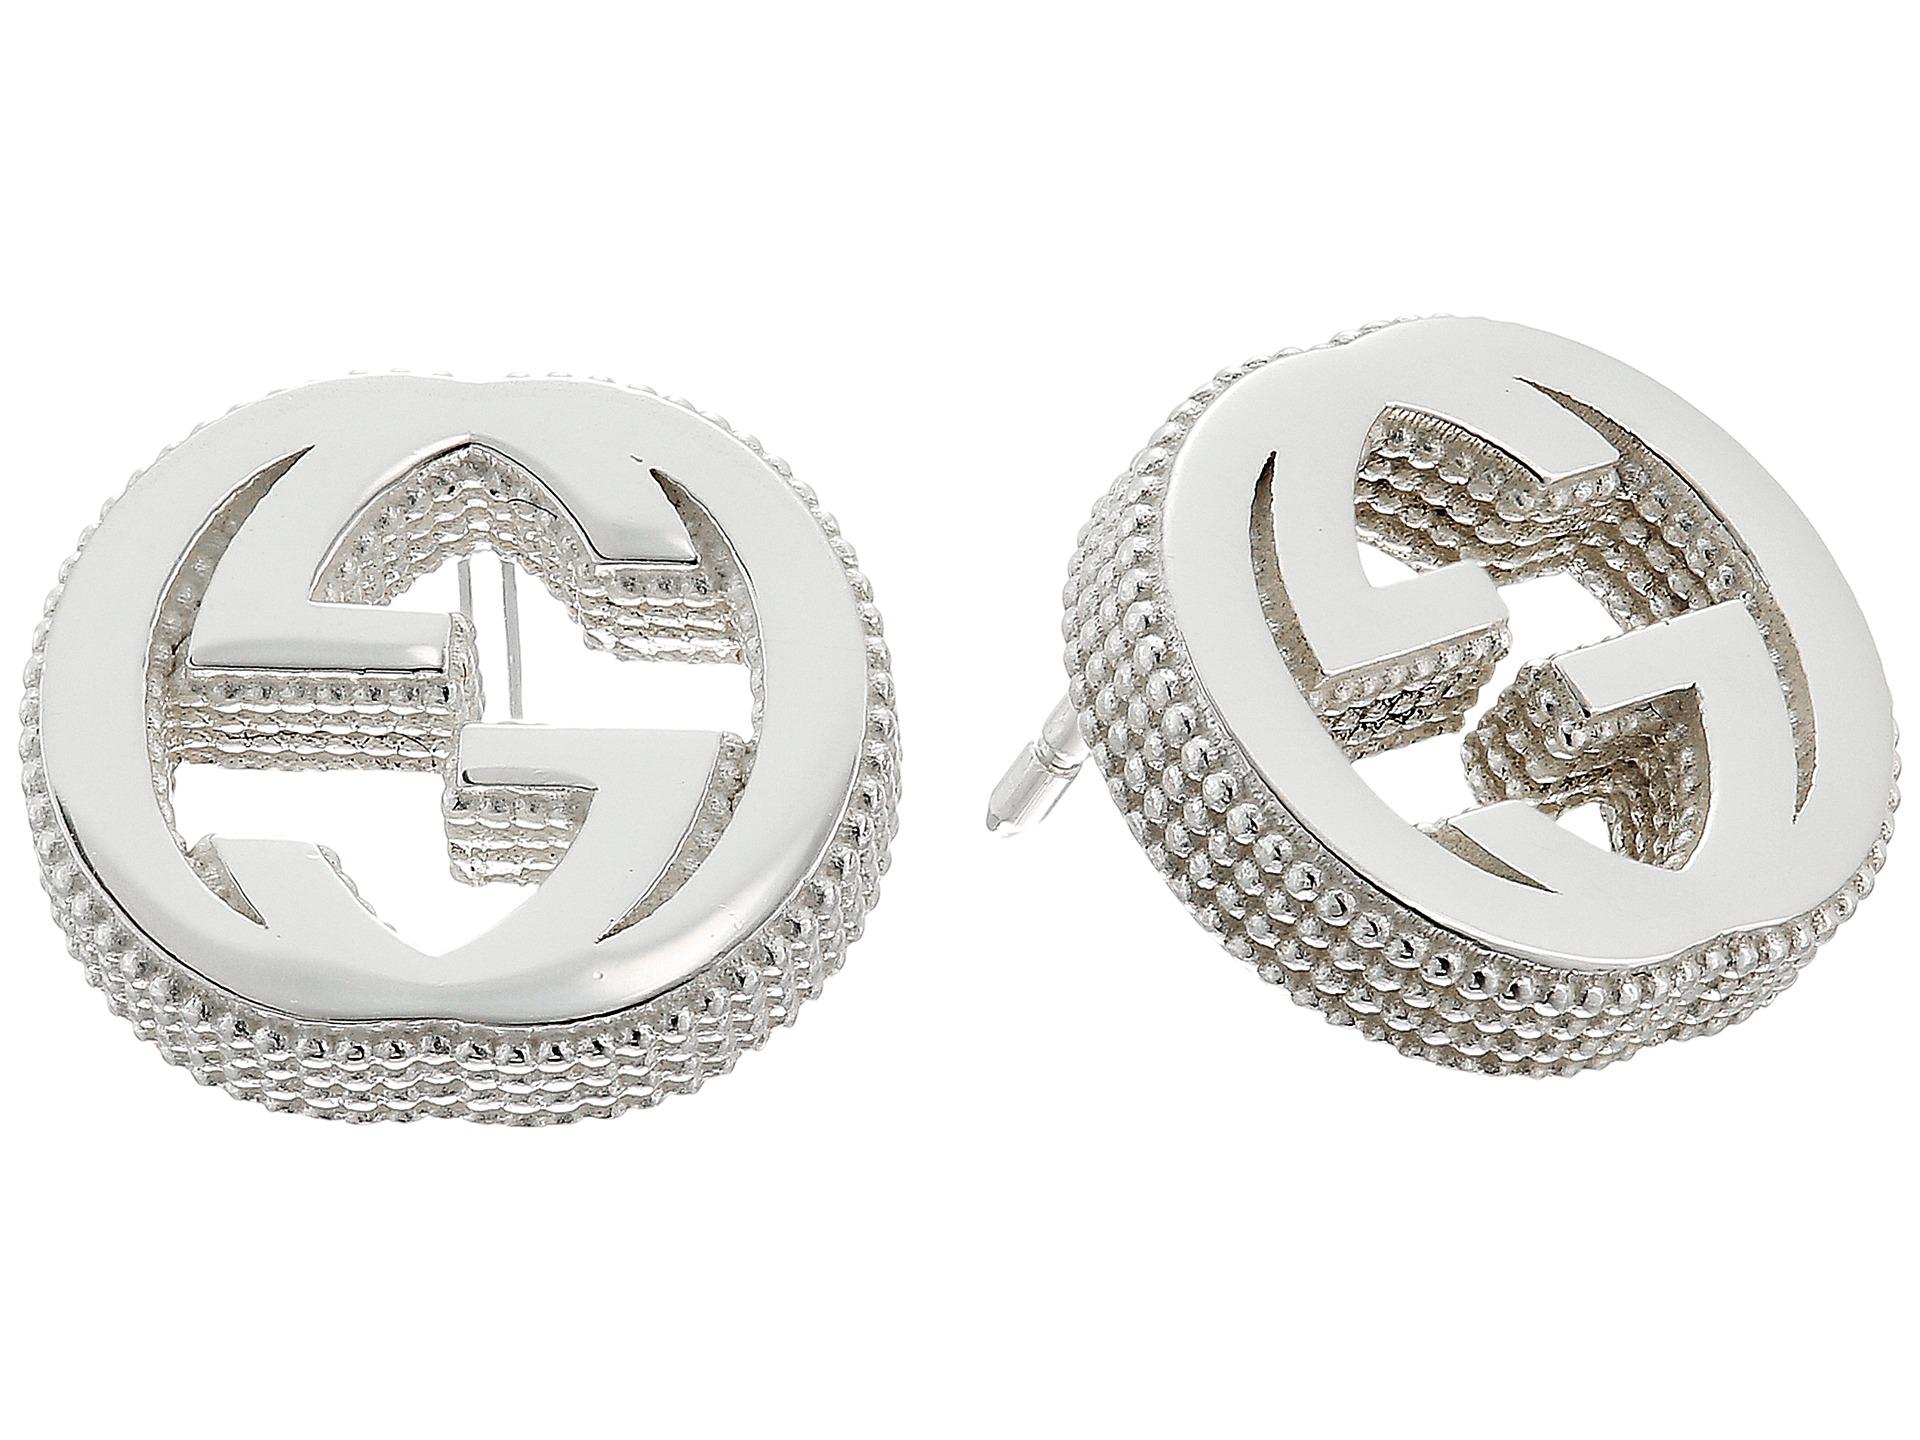 Lyst - Gucci Interlocking G Stud Earrings in Metallic